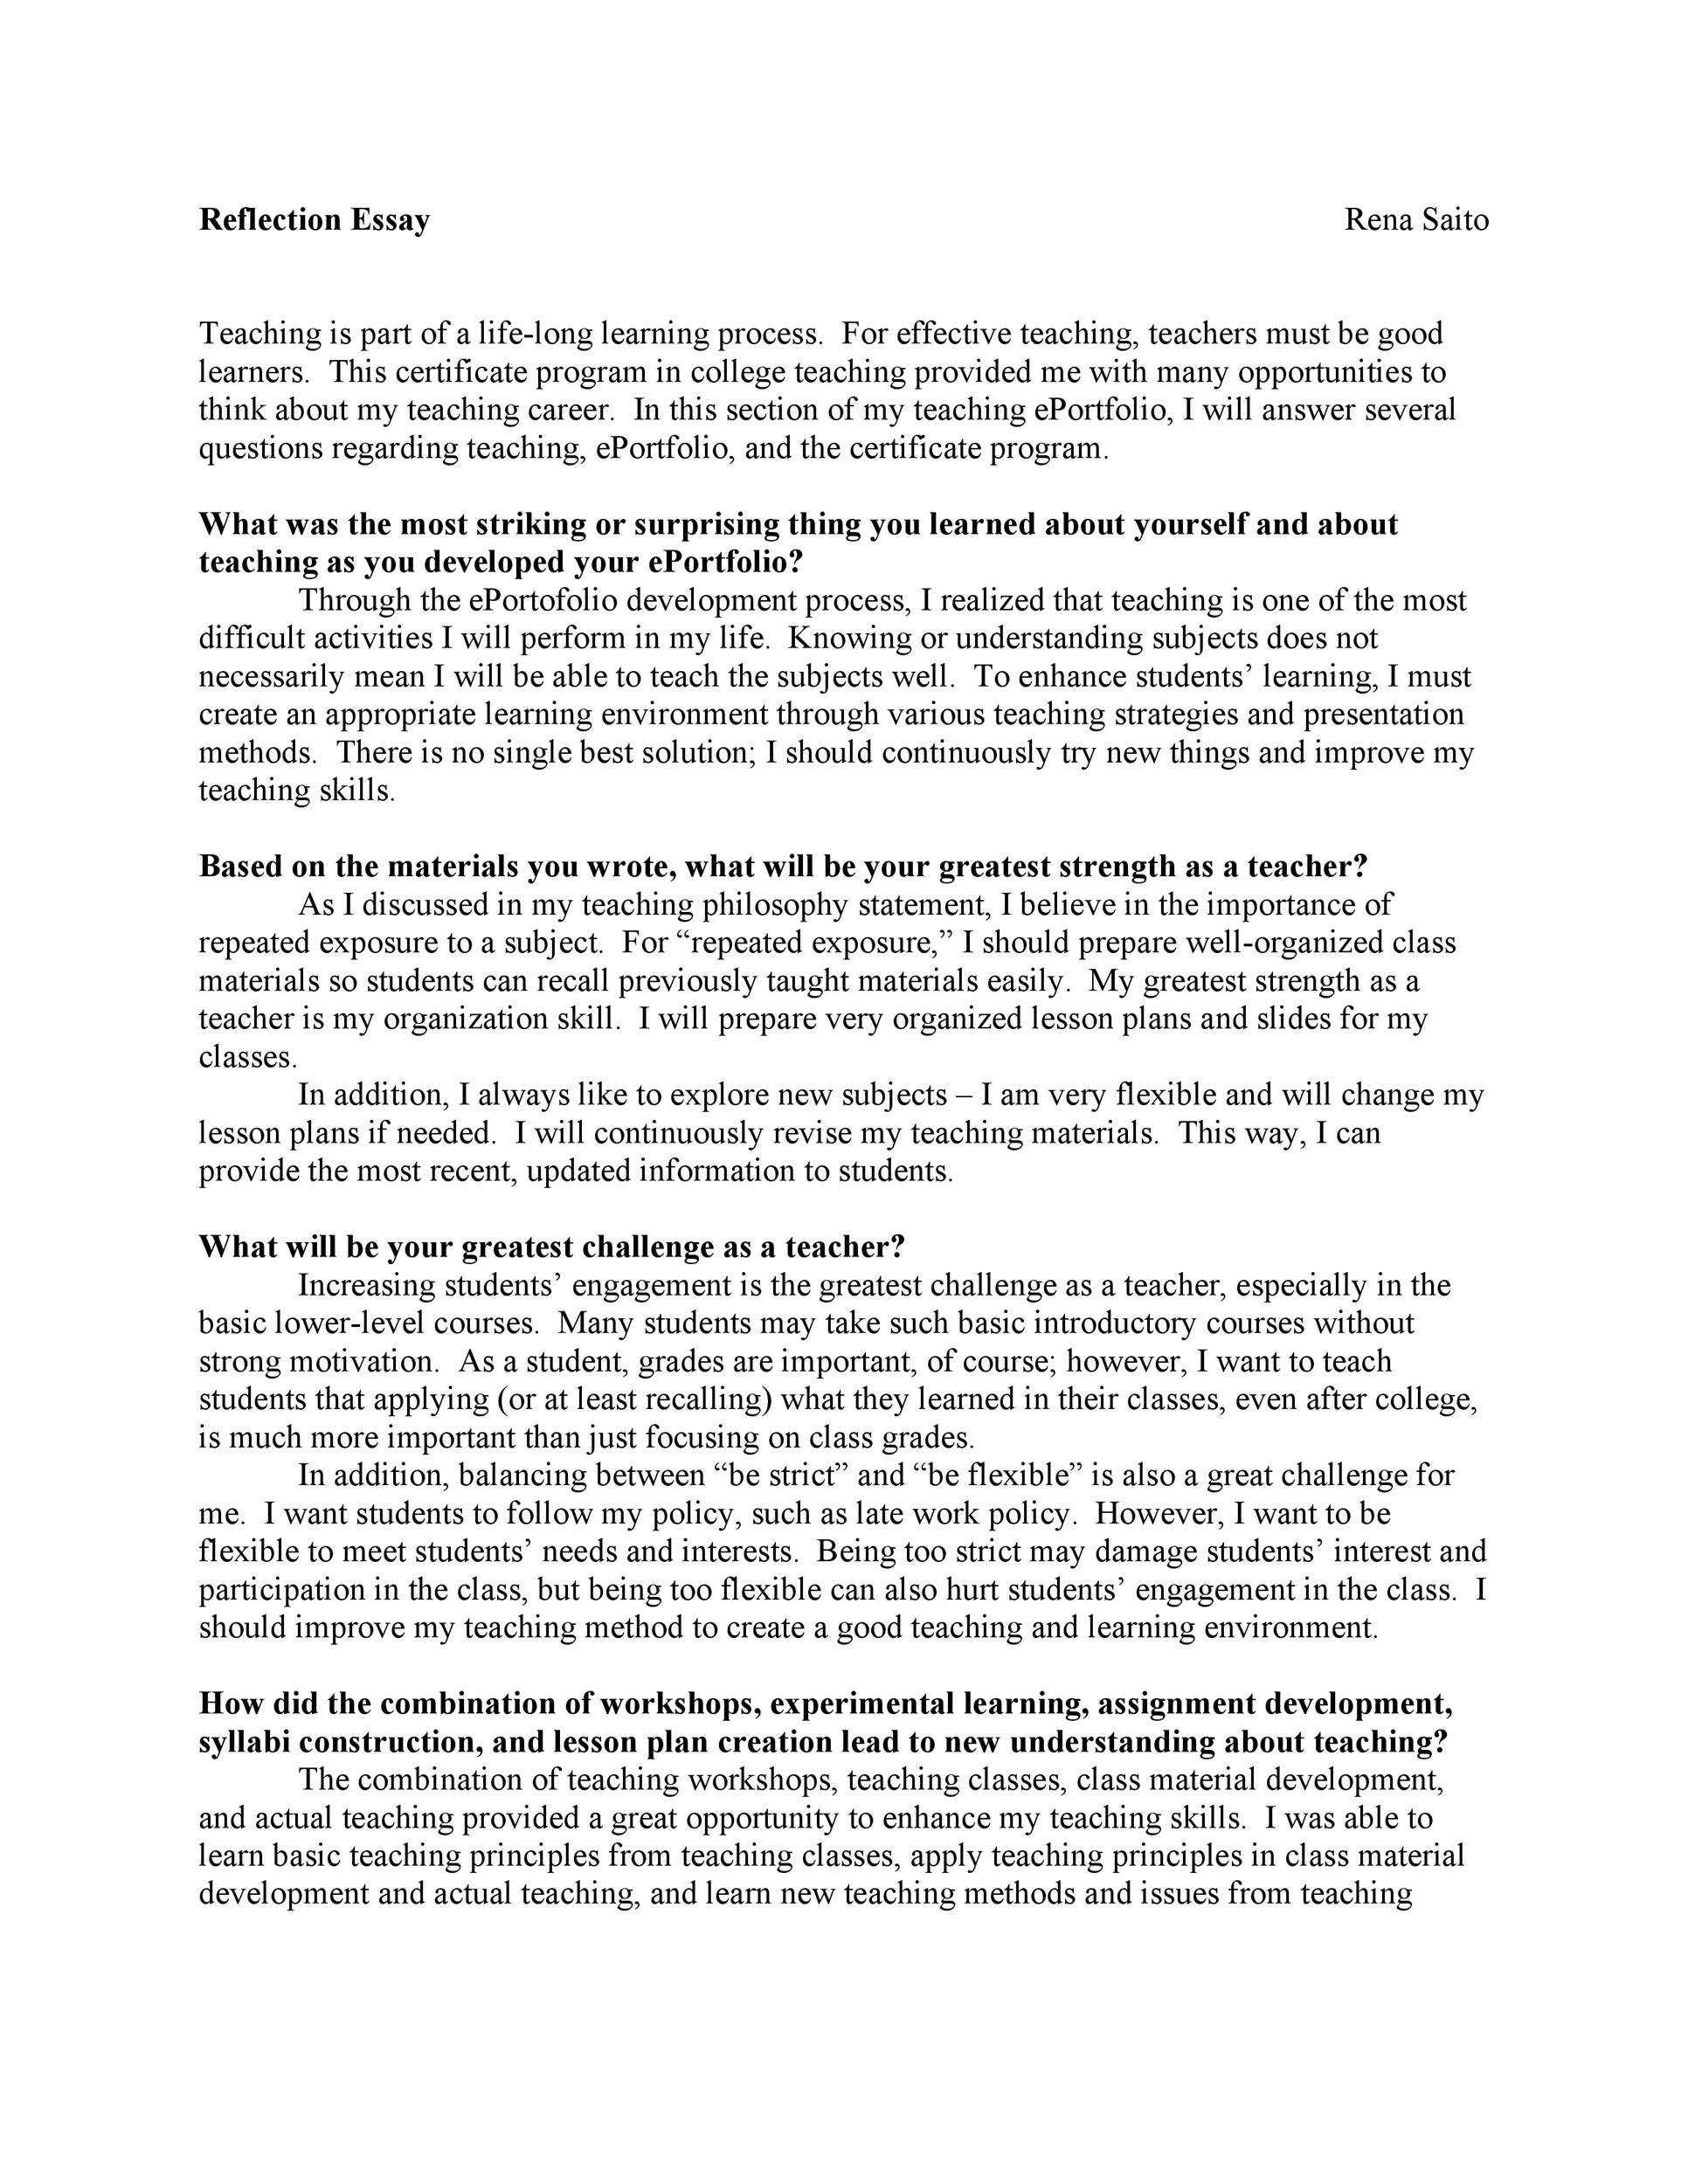 Free reflective essay example 23